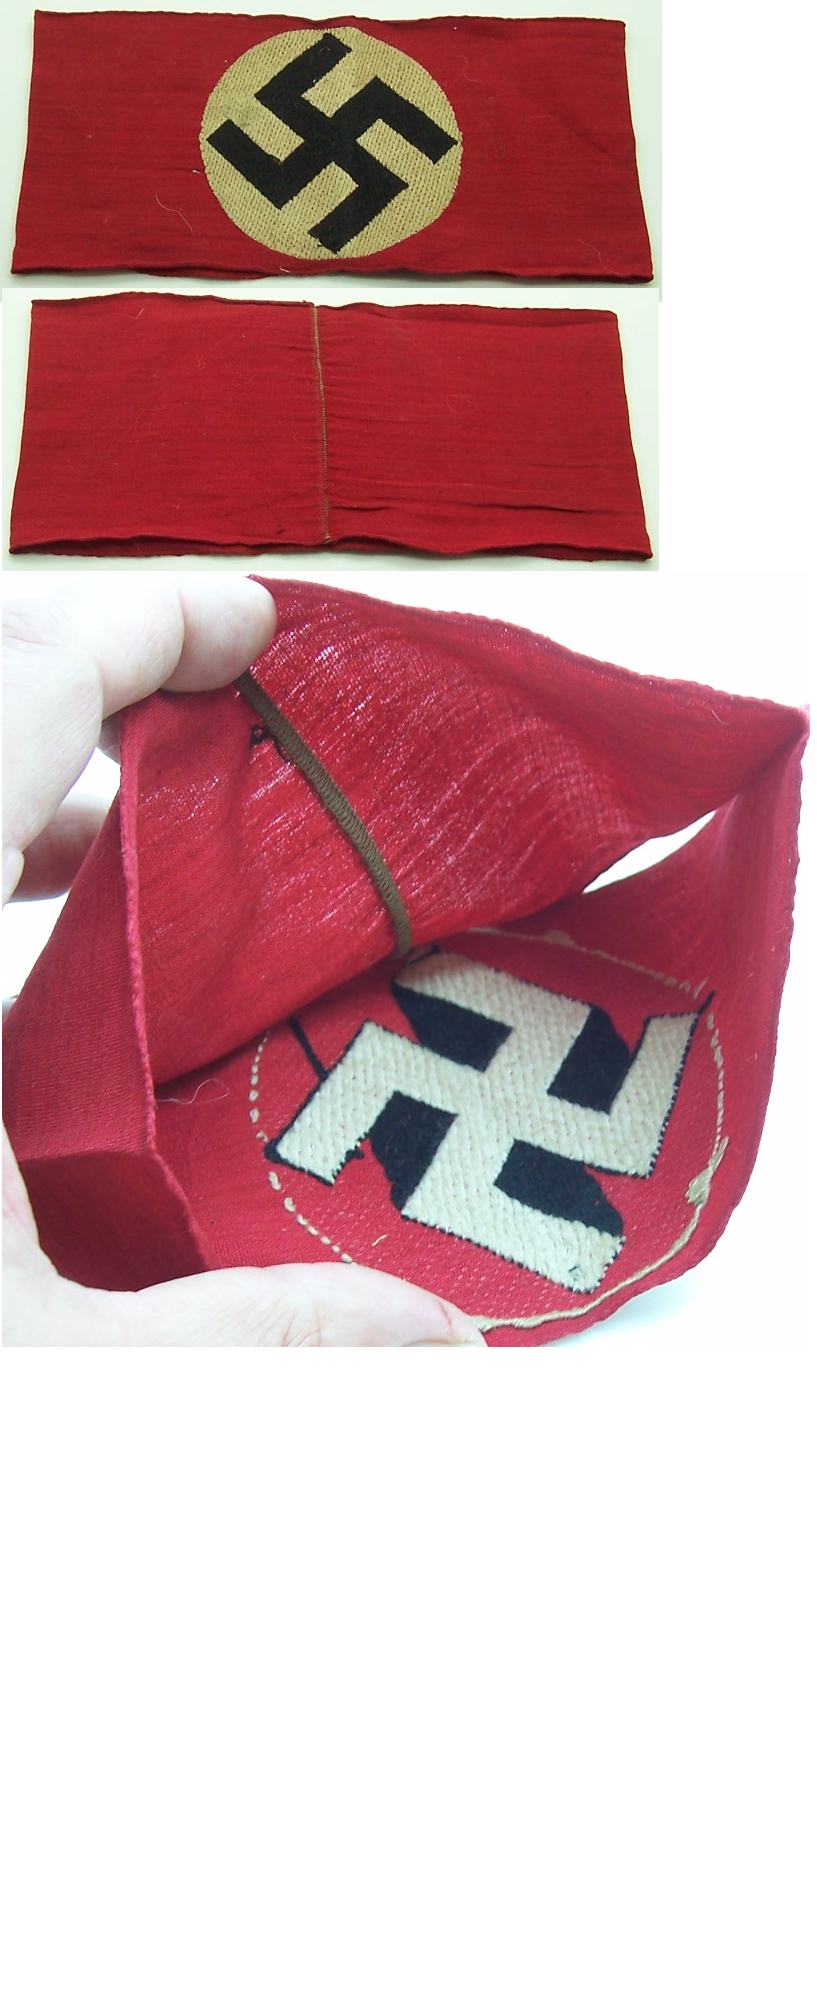 Early NSDAP Armband Variant